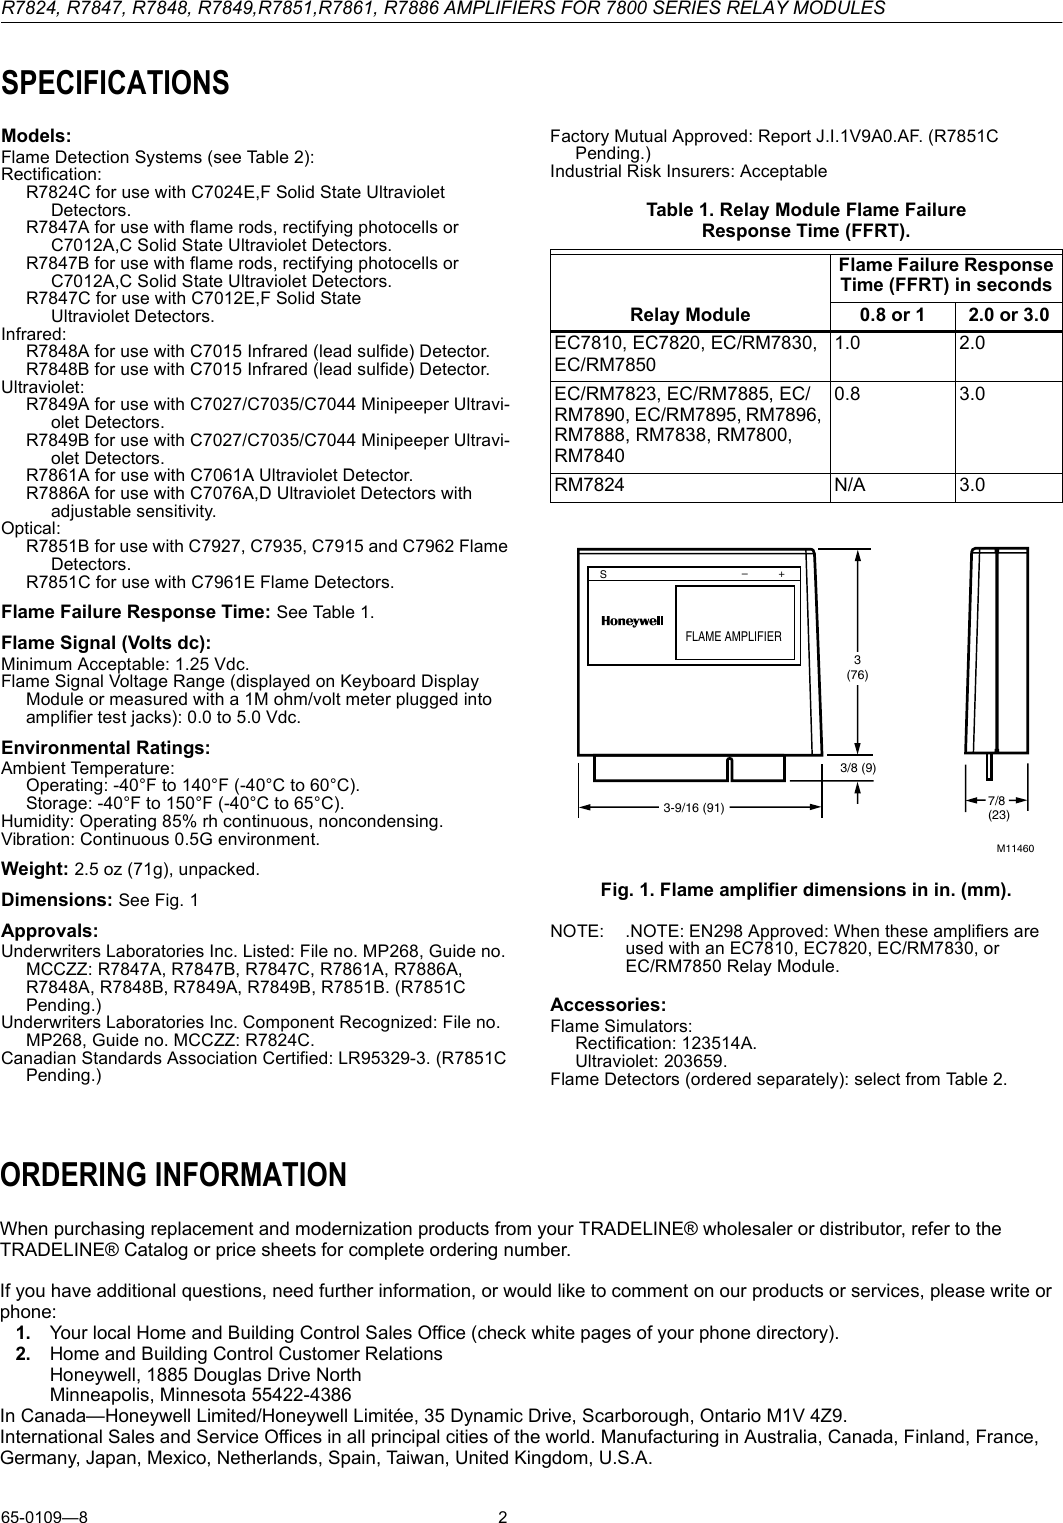 Page 2 of 8 - Honeywell Honeywell-Honeywell-Thermostat-R7847-Users-Manual- 65-0109 - R7824, R7847, R7848, R7849,R7851,R7861, R7886 Amplifiers Fir 7800 SERIES Relay Es  Honeywell-honeywell-thermostat-r7847-users-manual